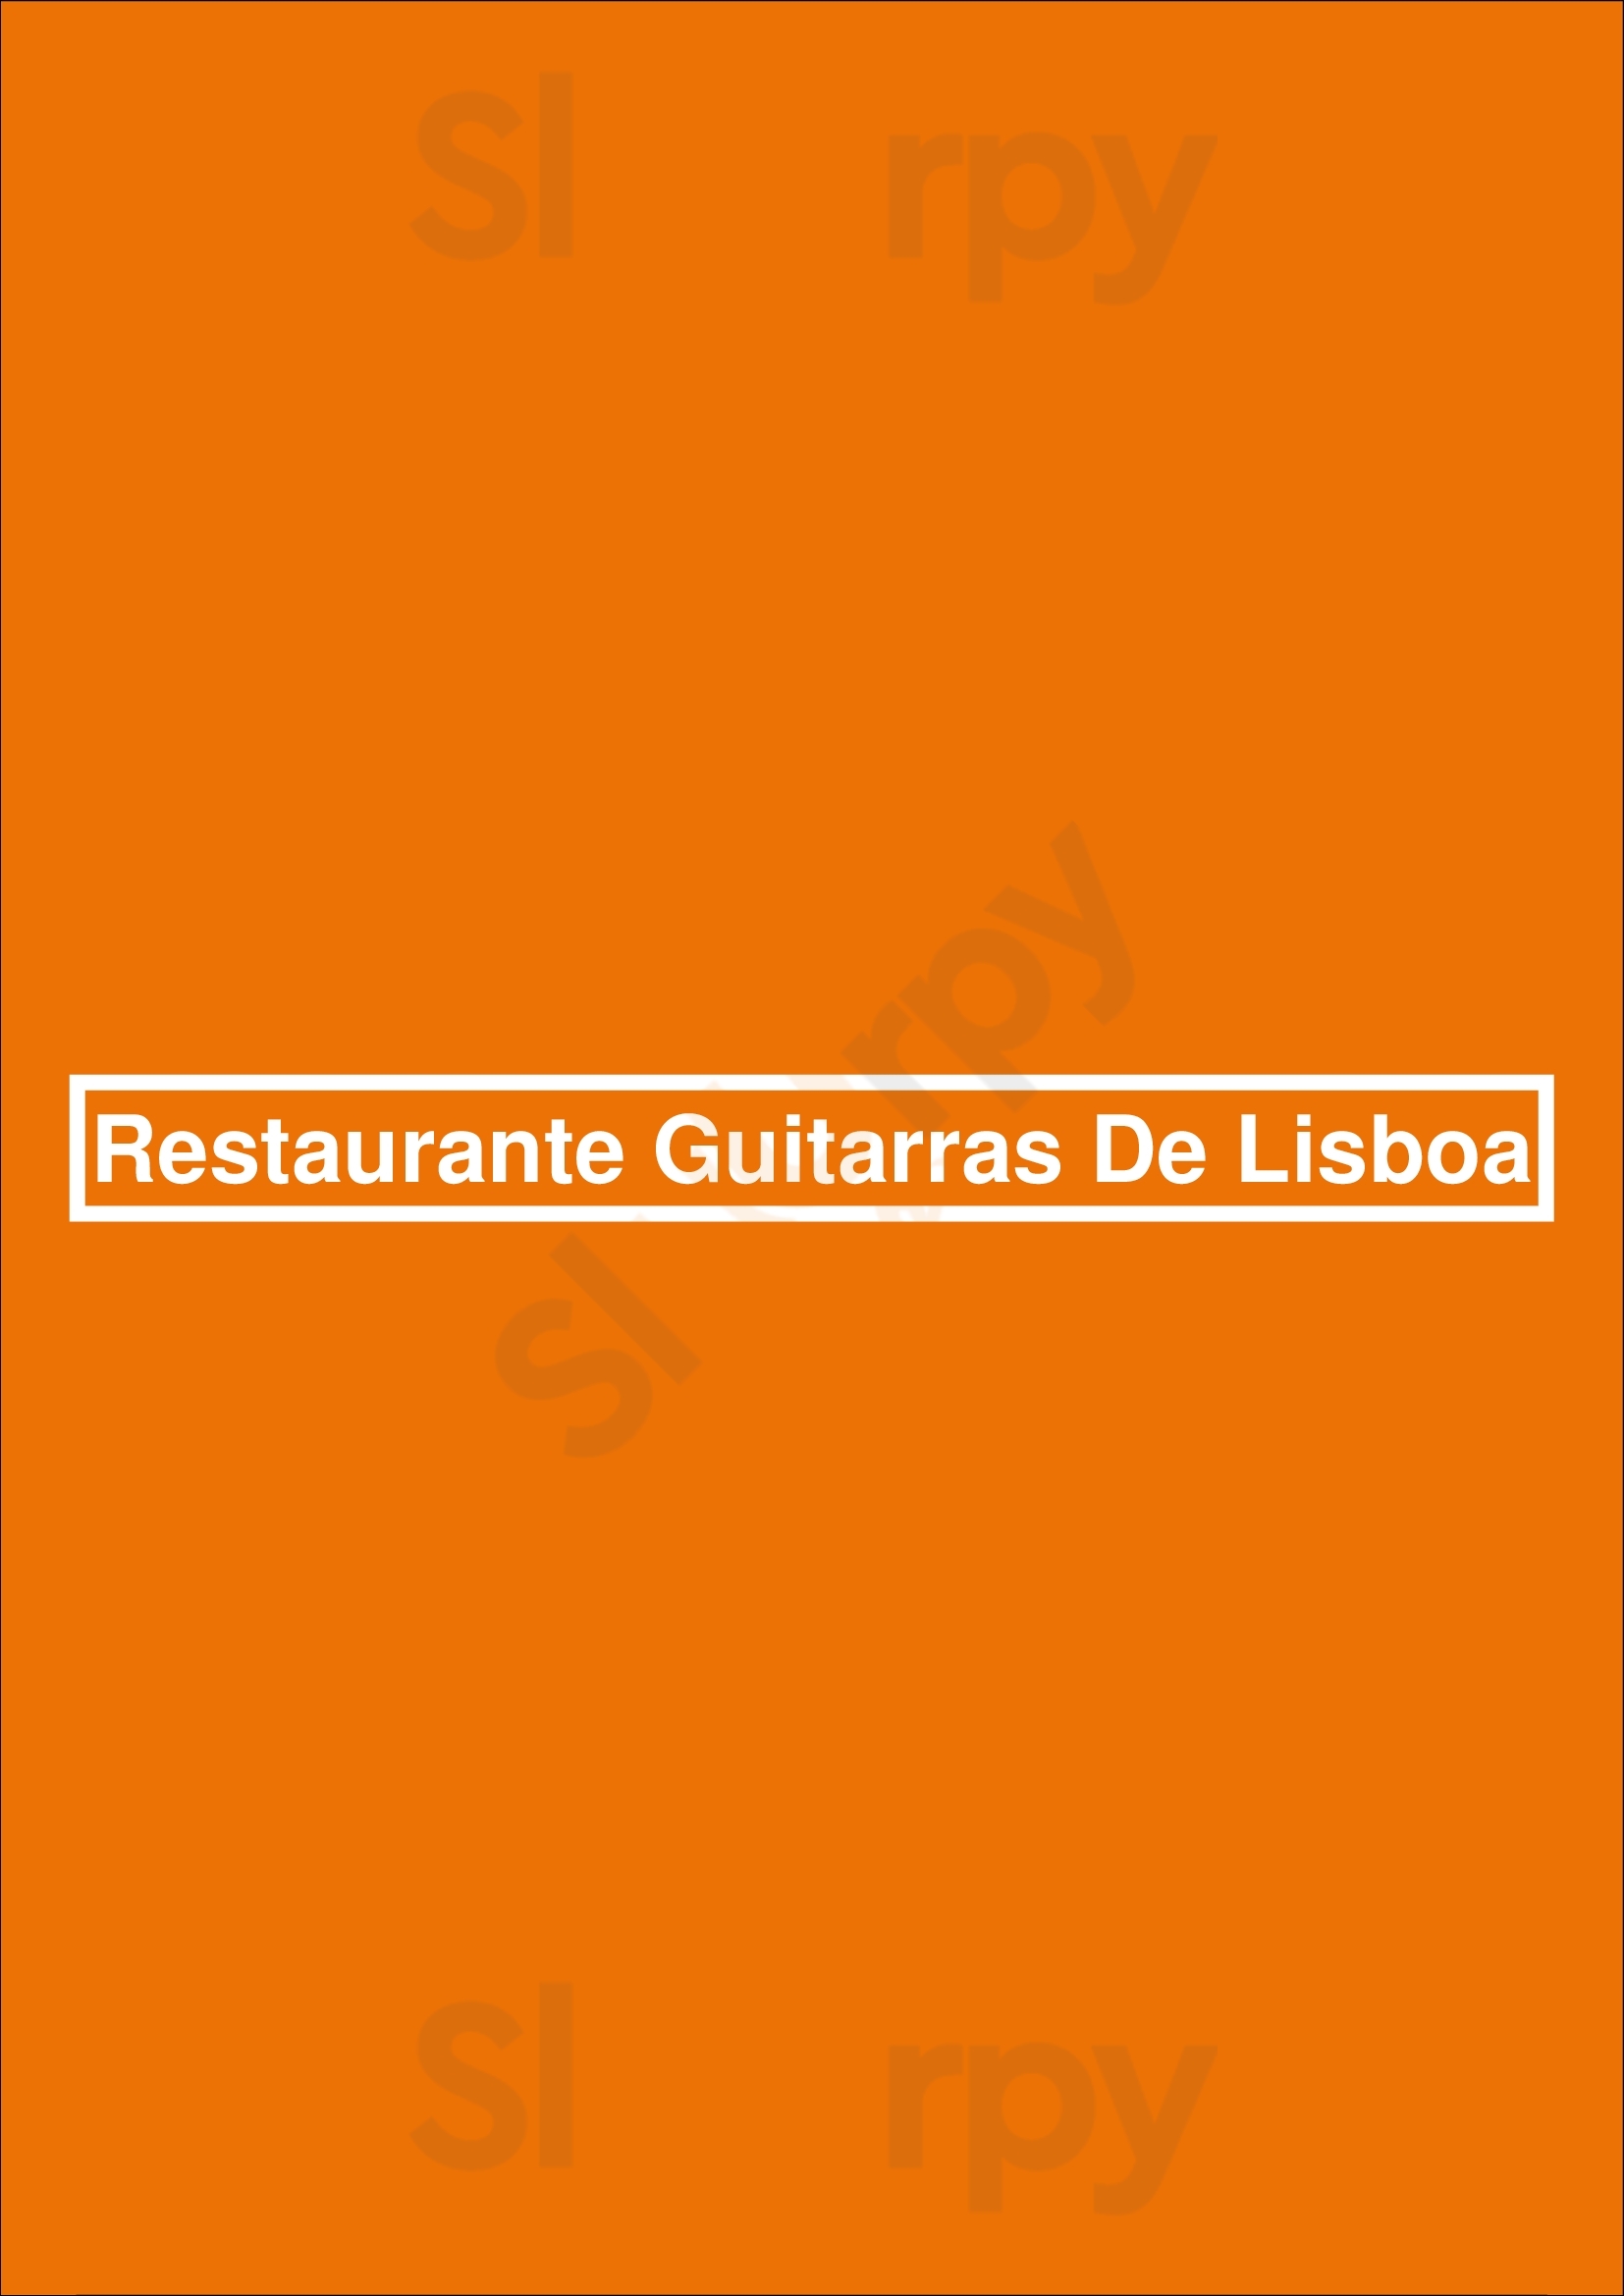 Restaurante Guitarras De Lisboa Lisboa Menu - 1